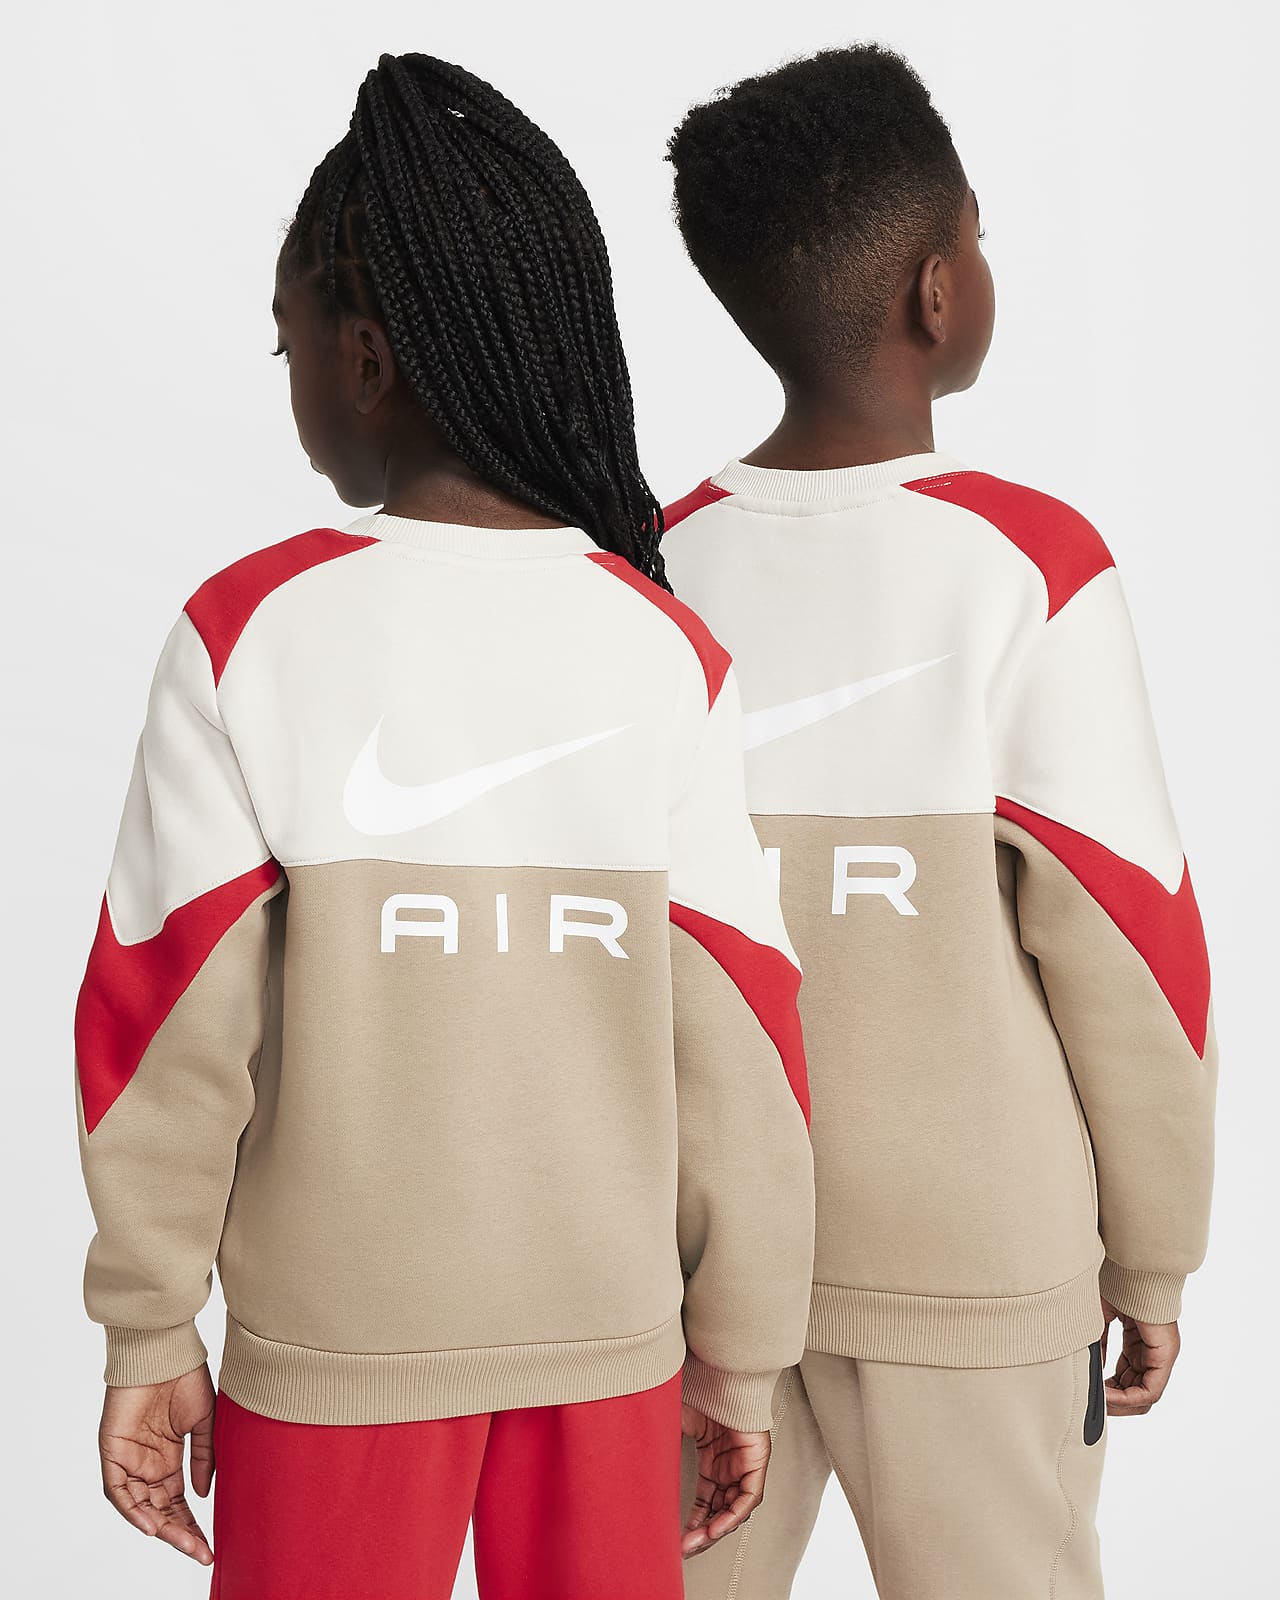 Nike Air Older Kids' Crew-Neck Sweatshirt